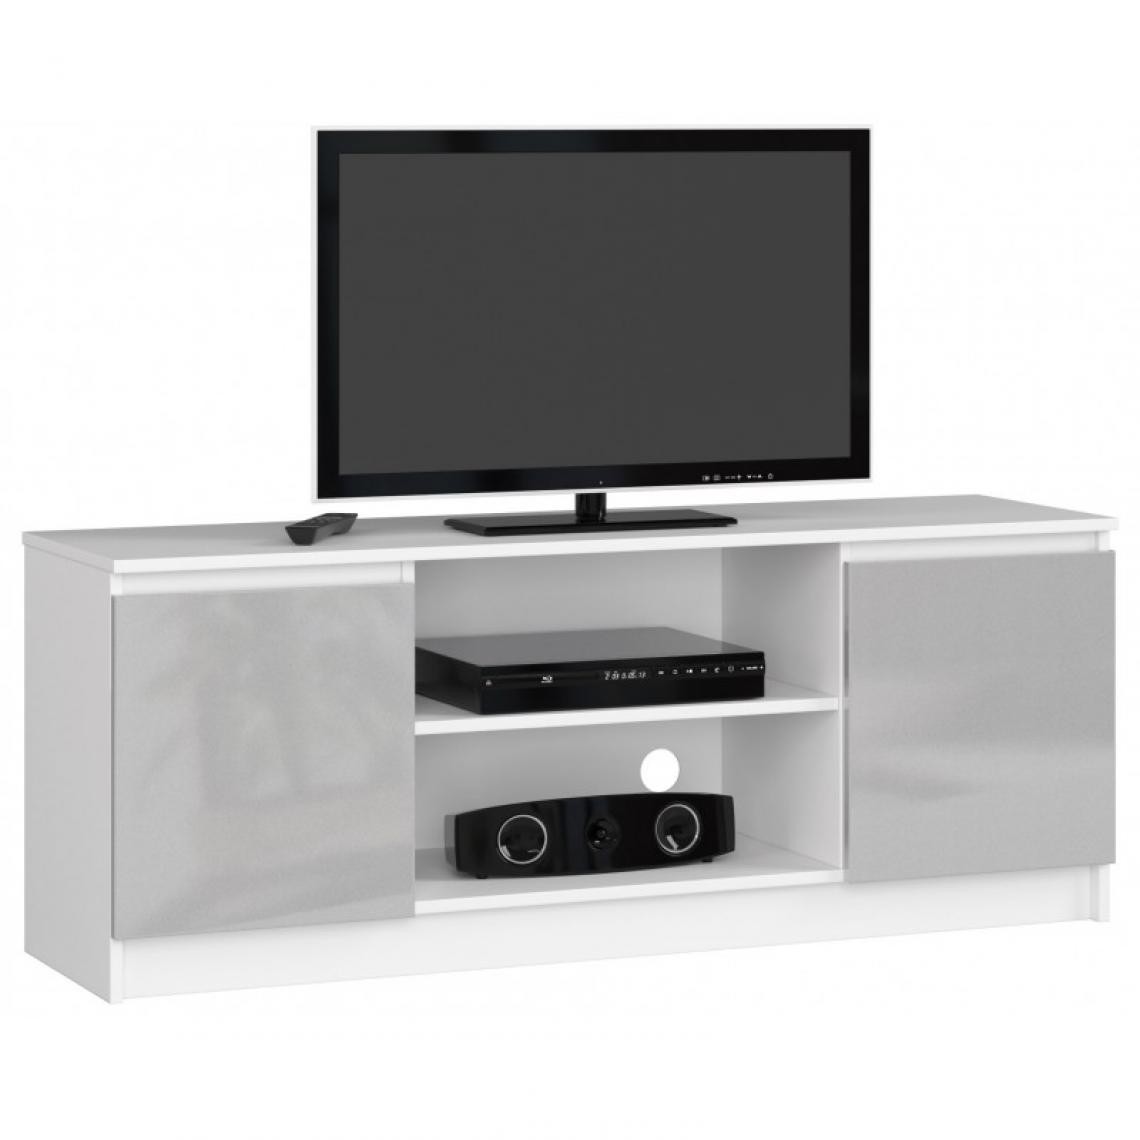 Hucoco - DUSK - Meuble TV style moderne salon - 140x55x40 - 2 tablettes+2 portes - Multimédia - Gris - Meubles TV, Hi-Fi